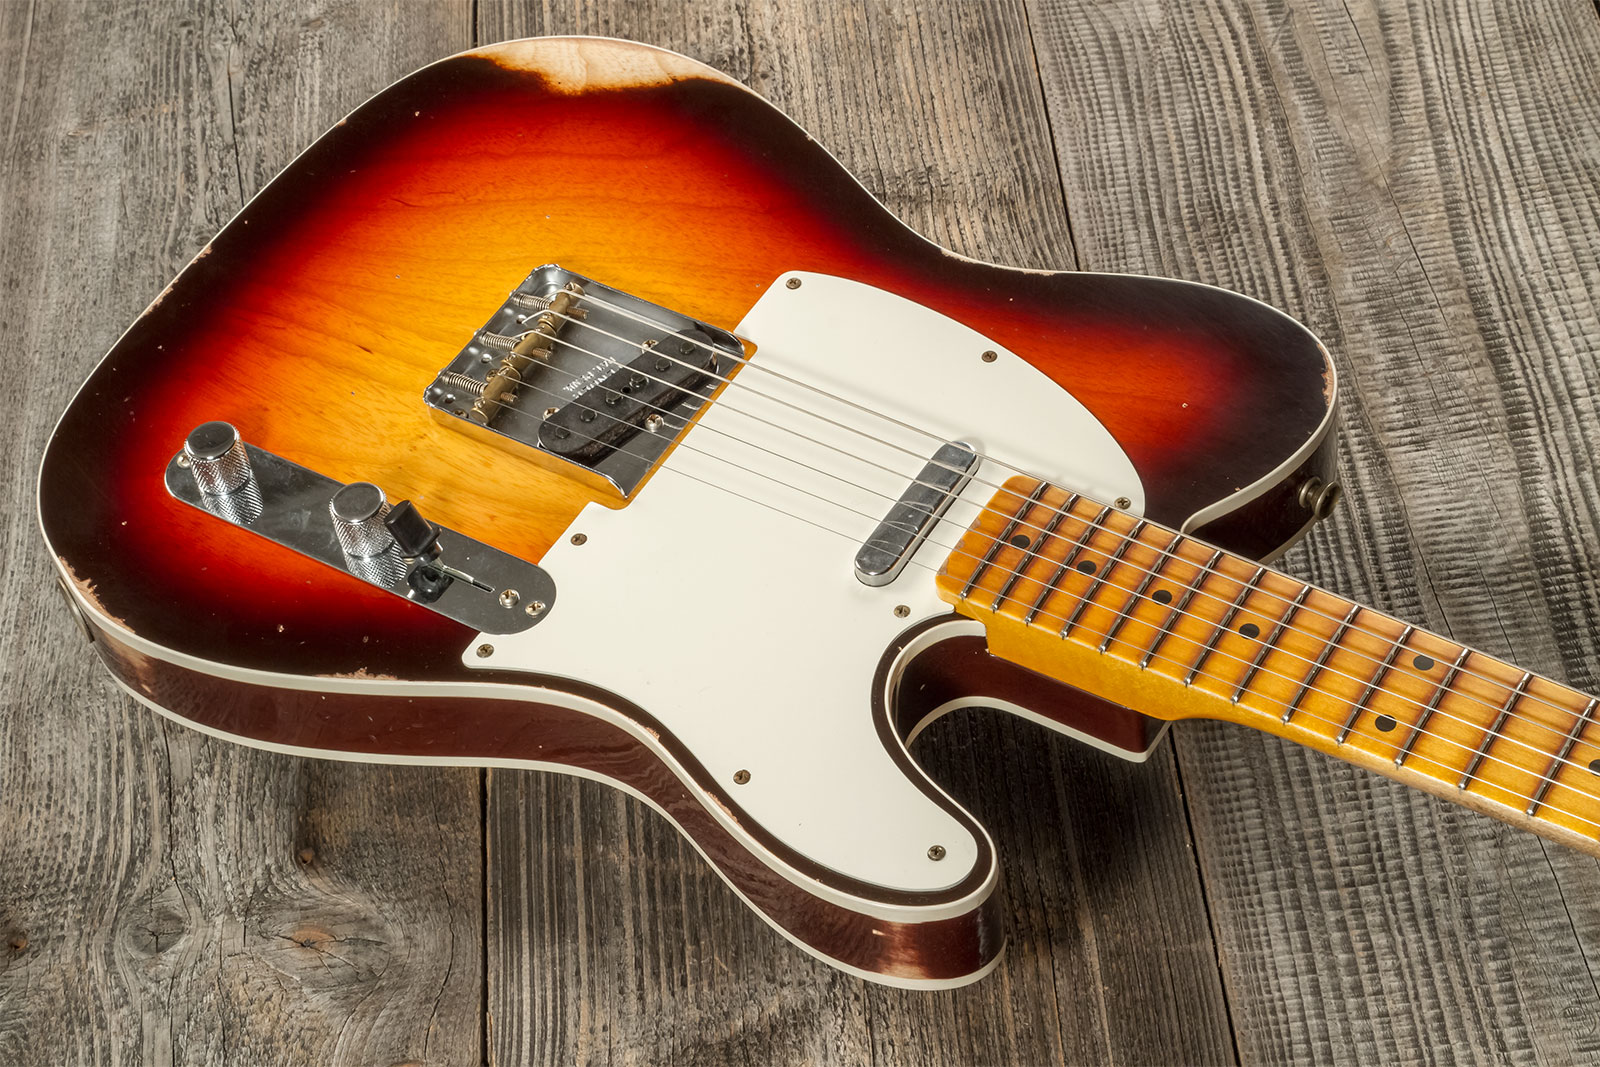 Fender Custom Shop Tele Custom 1959 2s Ht Mn #cz573750 - Relic Chocolate 3-color Sunburst - Tel shape electric guitar - Variation 2